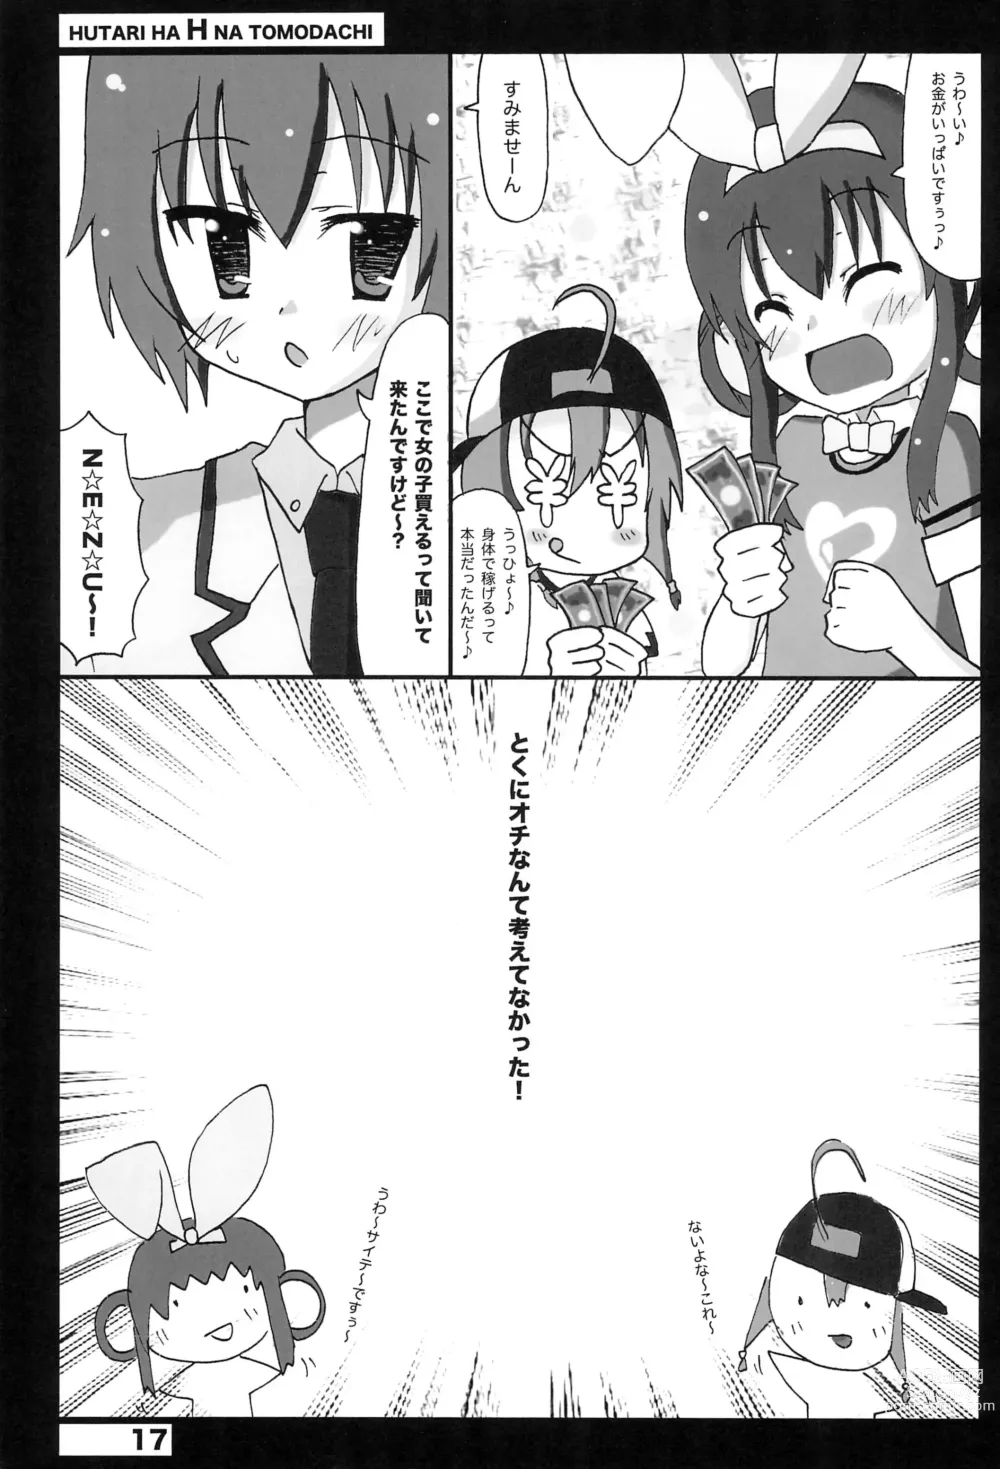 Page 17 of doujinshi Futari wa H na Tomodachi